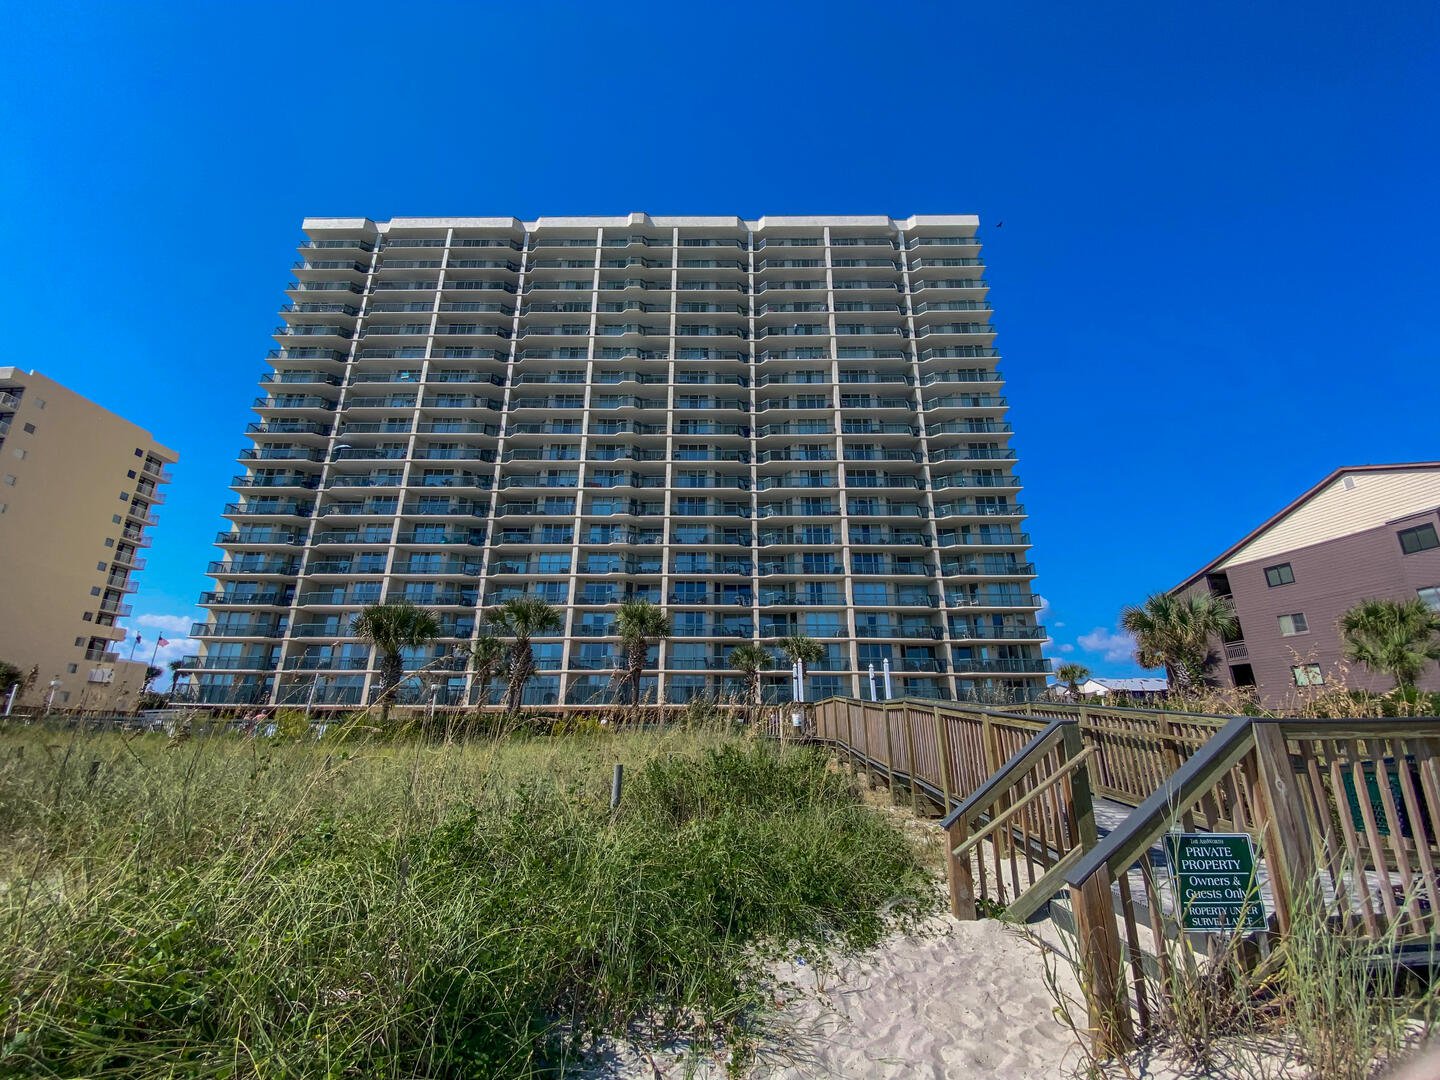 Myrtle Beach Vacation Rentals, Condominiums and More